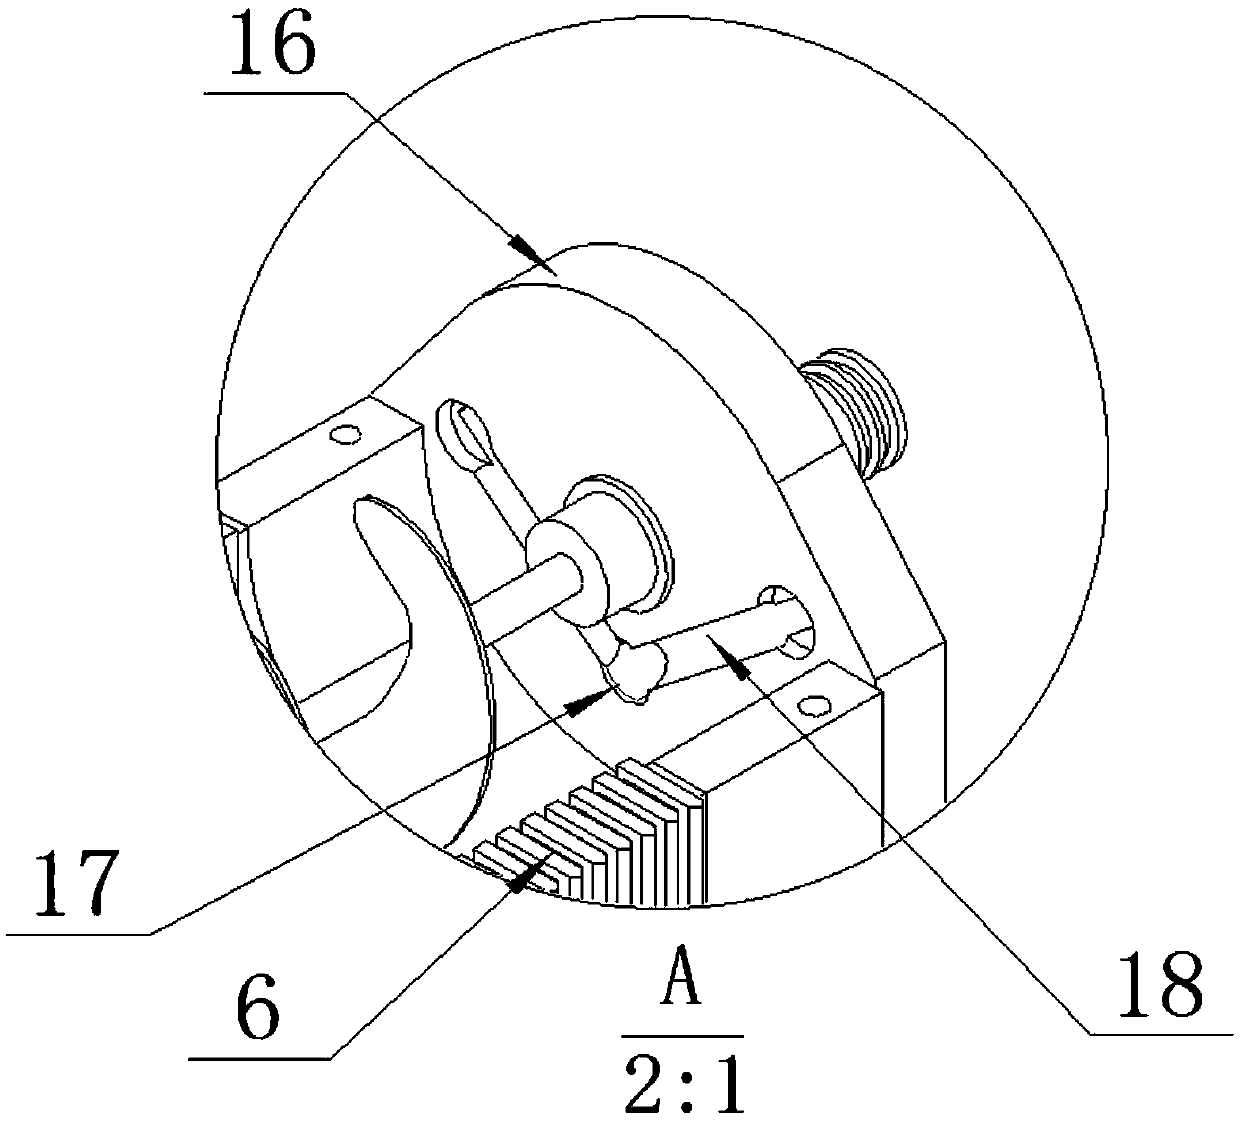 Discharging mechanism with air-jet dual-vibration effect for mechanical equipment